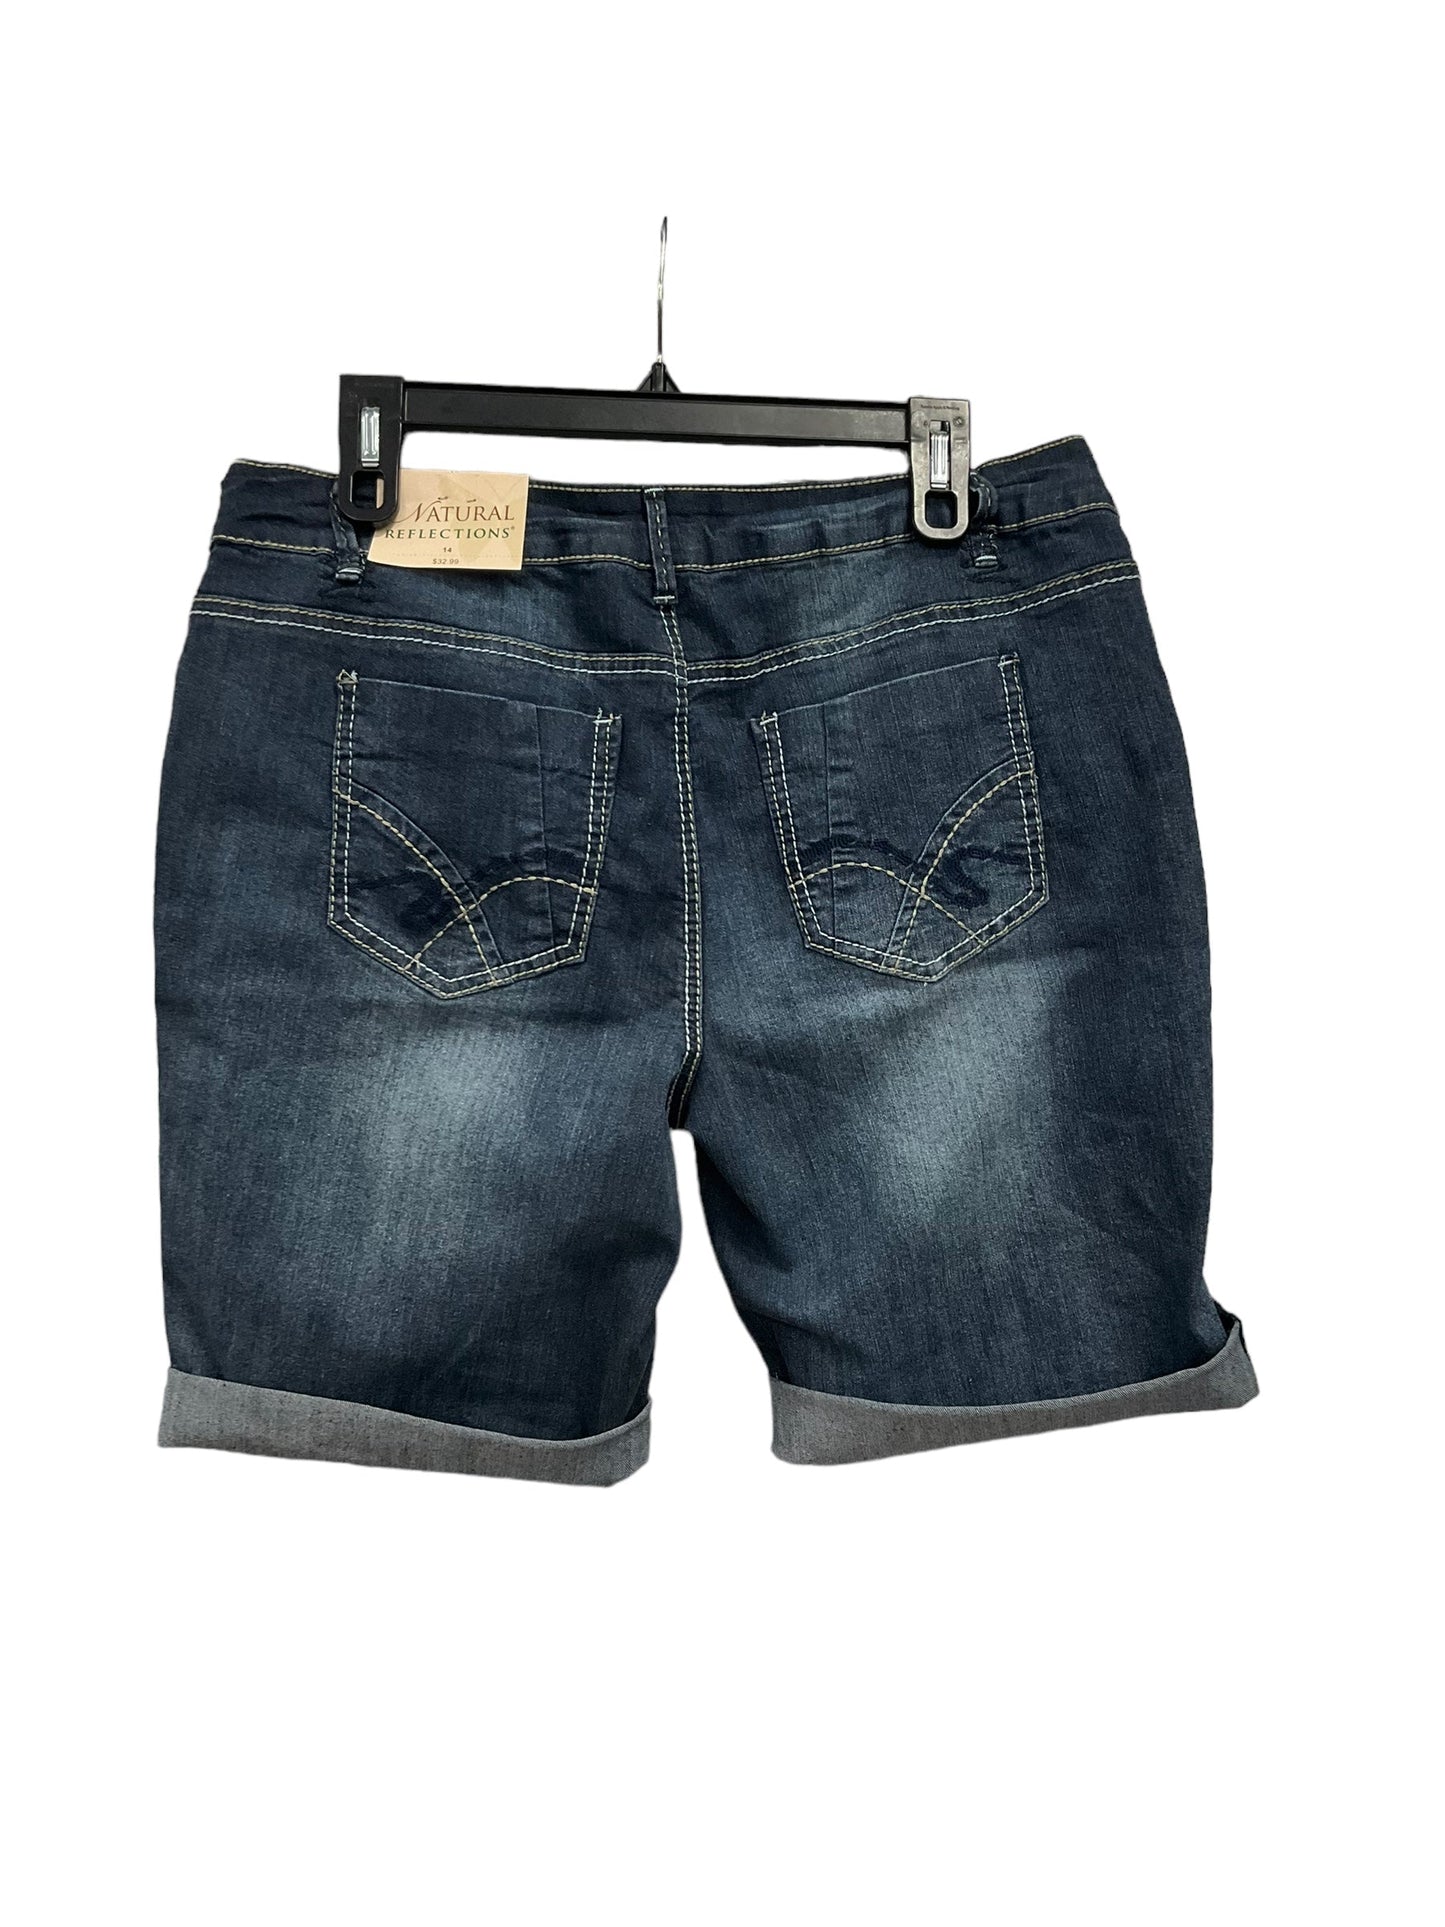 Blue Denim Shorts Natural Reflections, Size 14